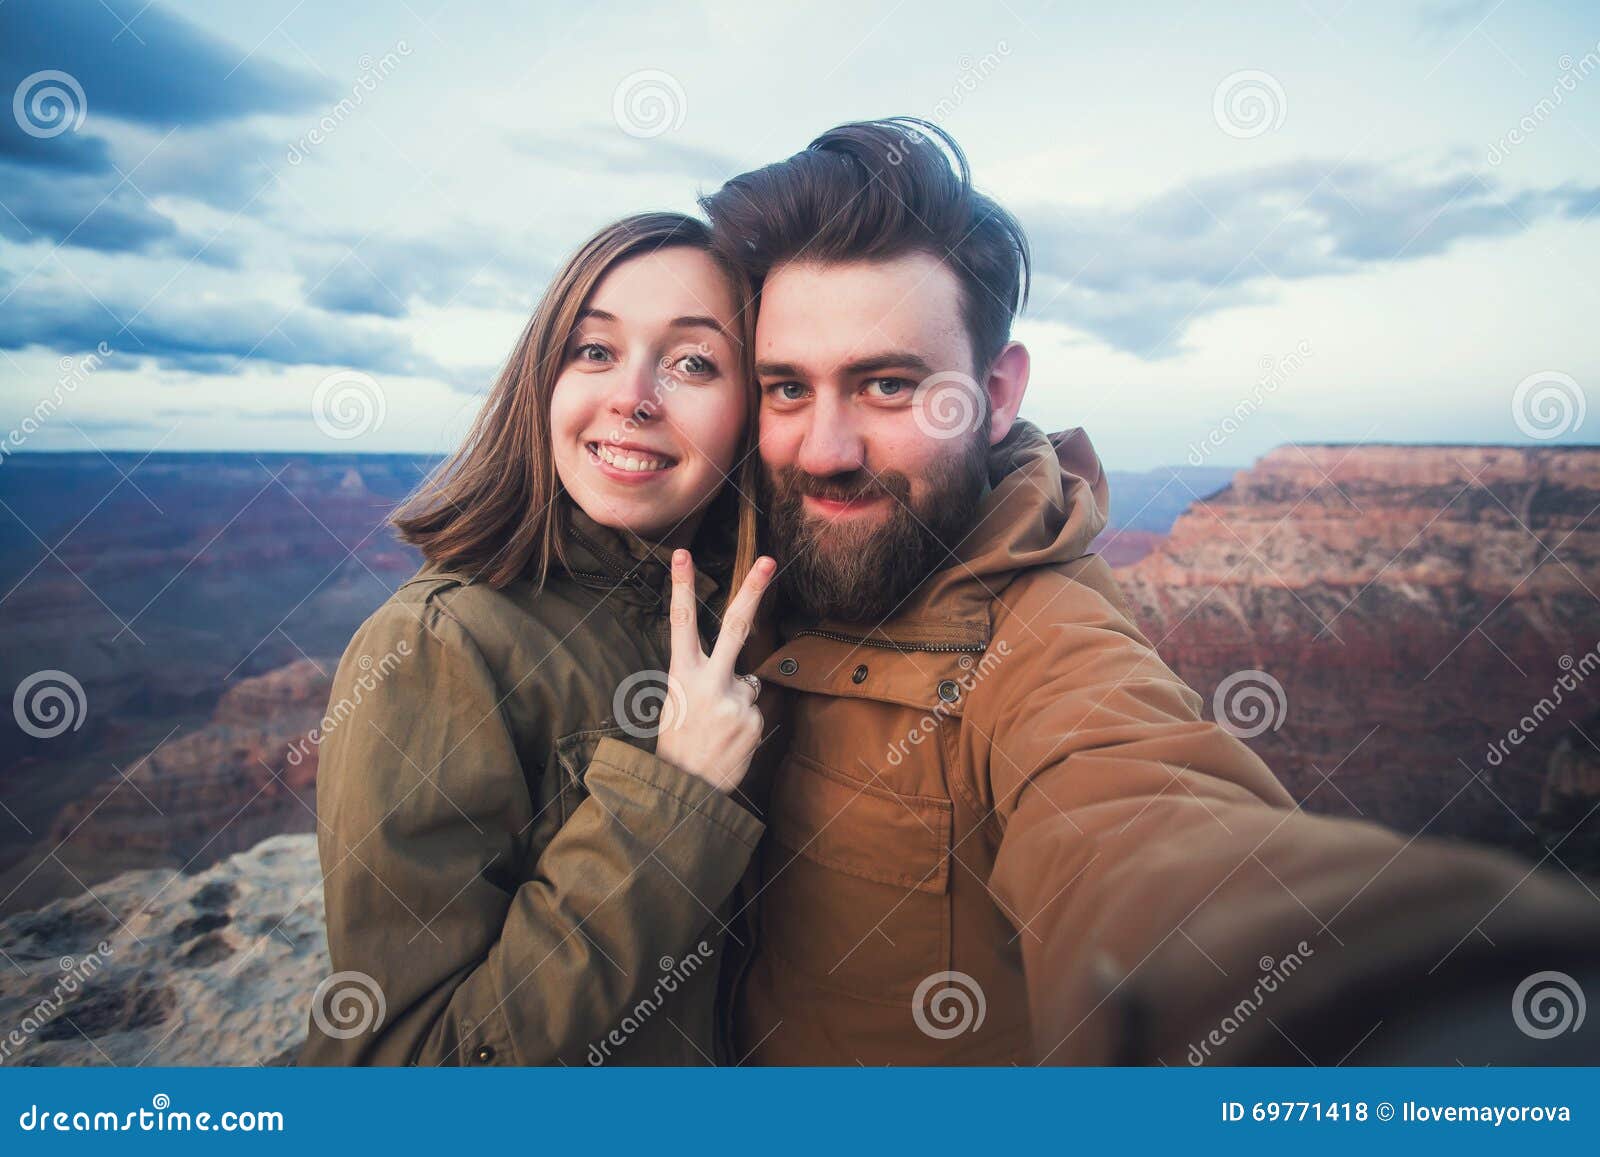 selfie pose for couple - Lemon8 Search